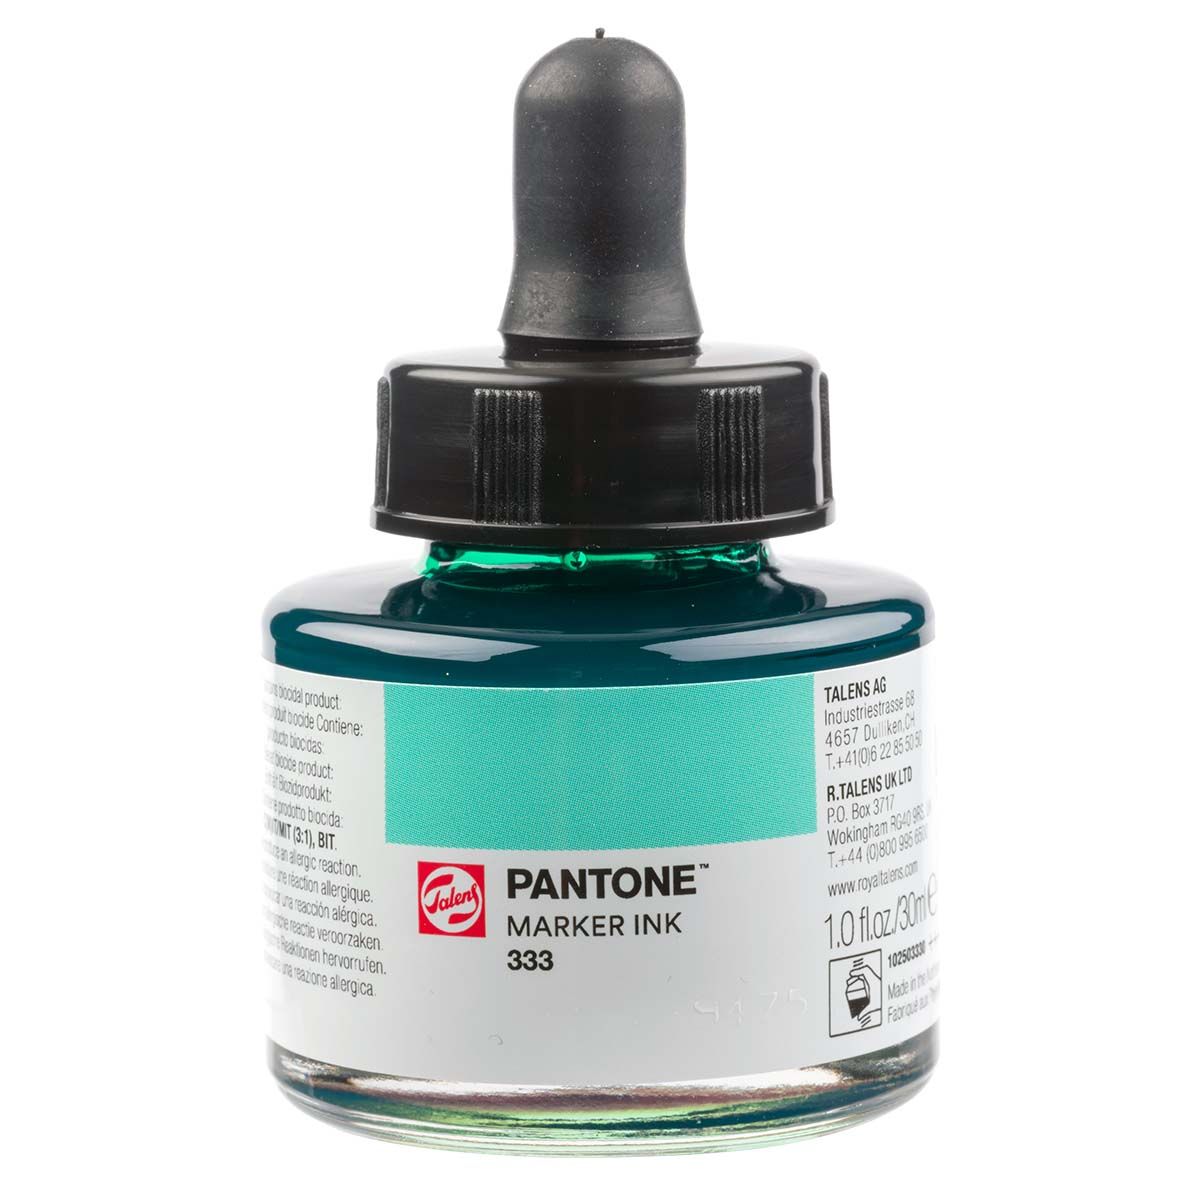 Talens Pantone Marker Ink Refill - 333, 30 ml